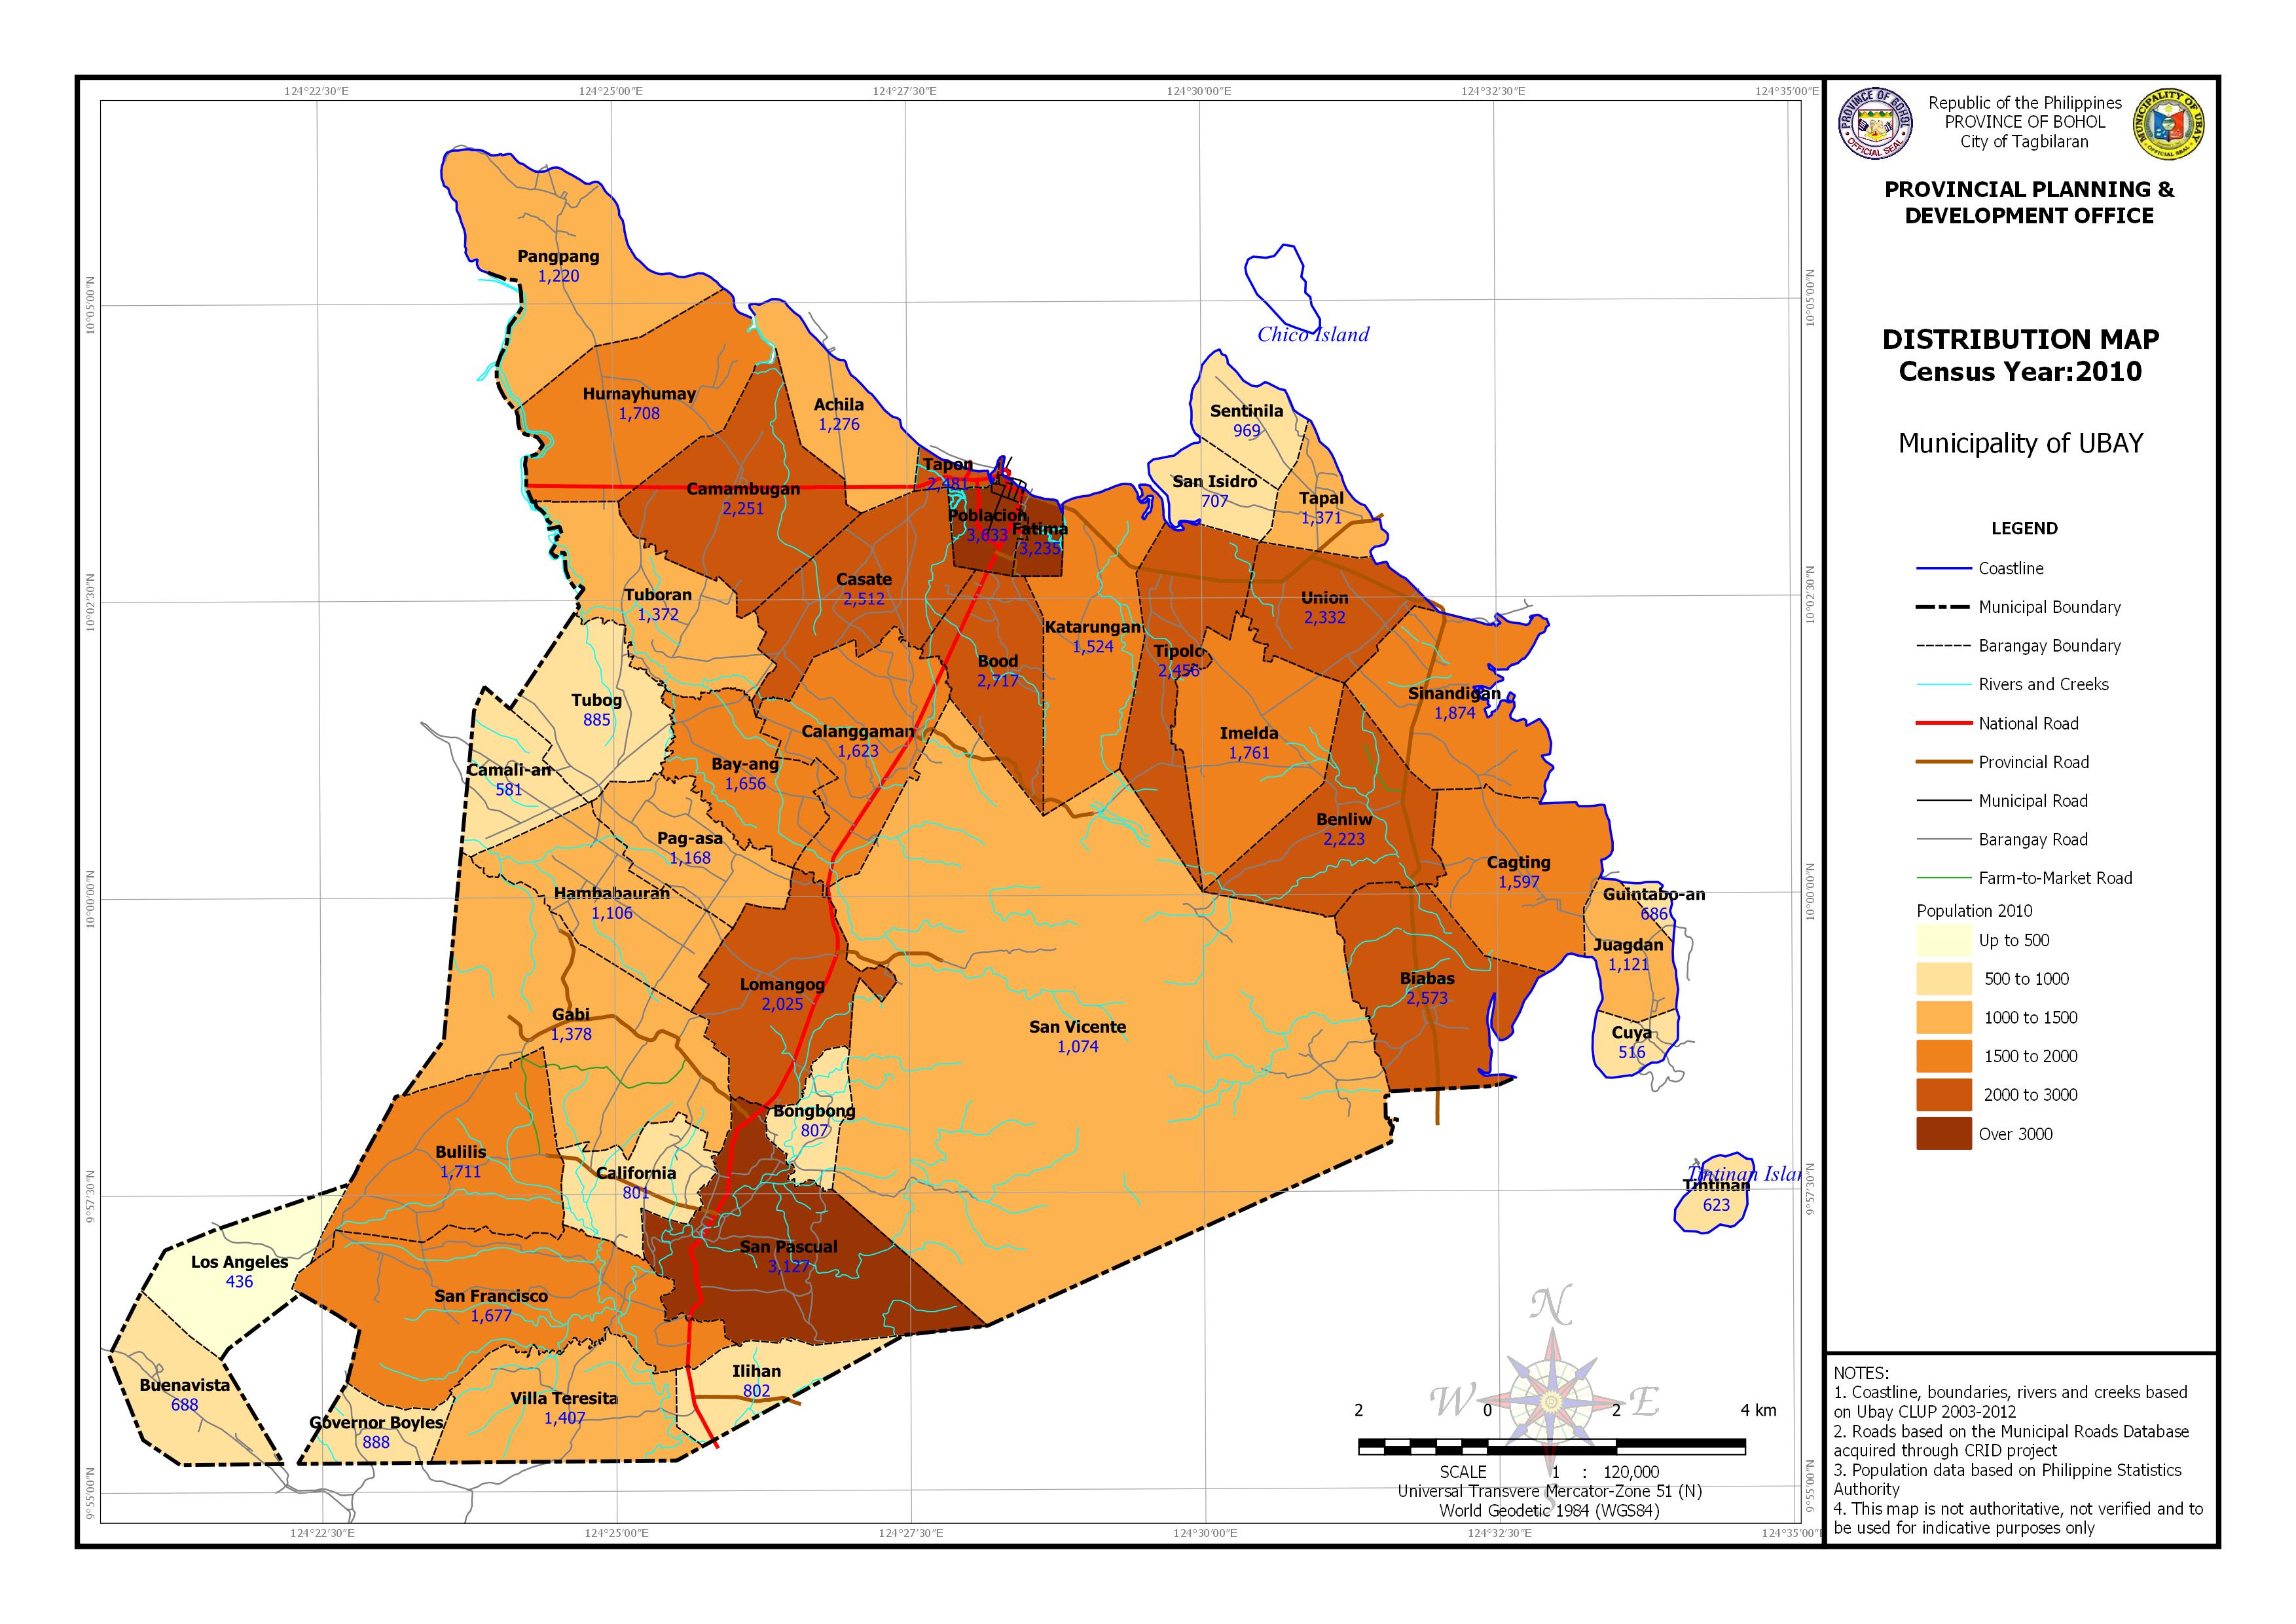 Population Distribution Census Year: 2010